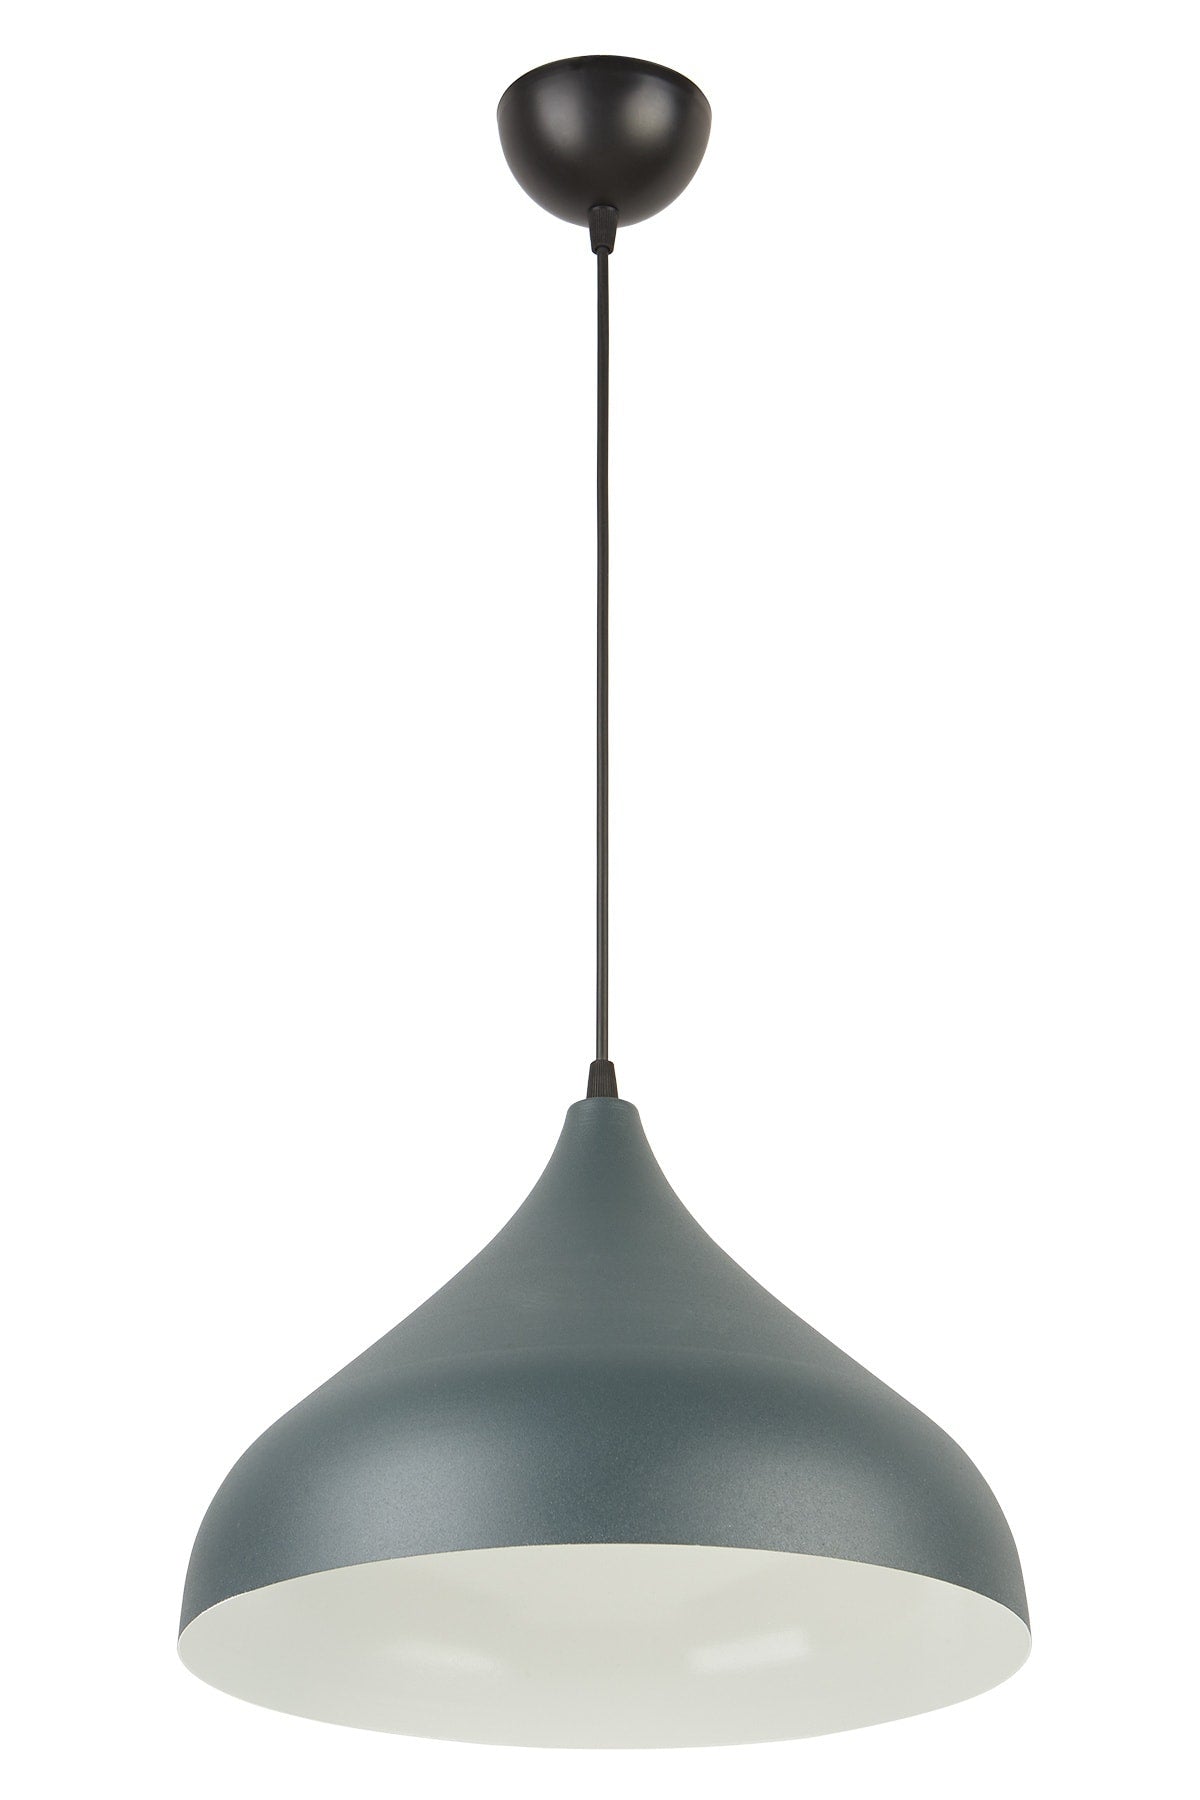 Reyes Special Design Modern Decorative Cafe Kitchen Living Room Anthracite White Pendant Lamp Single Chandelier